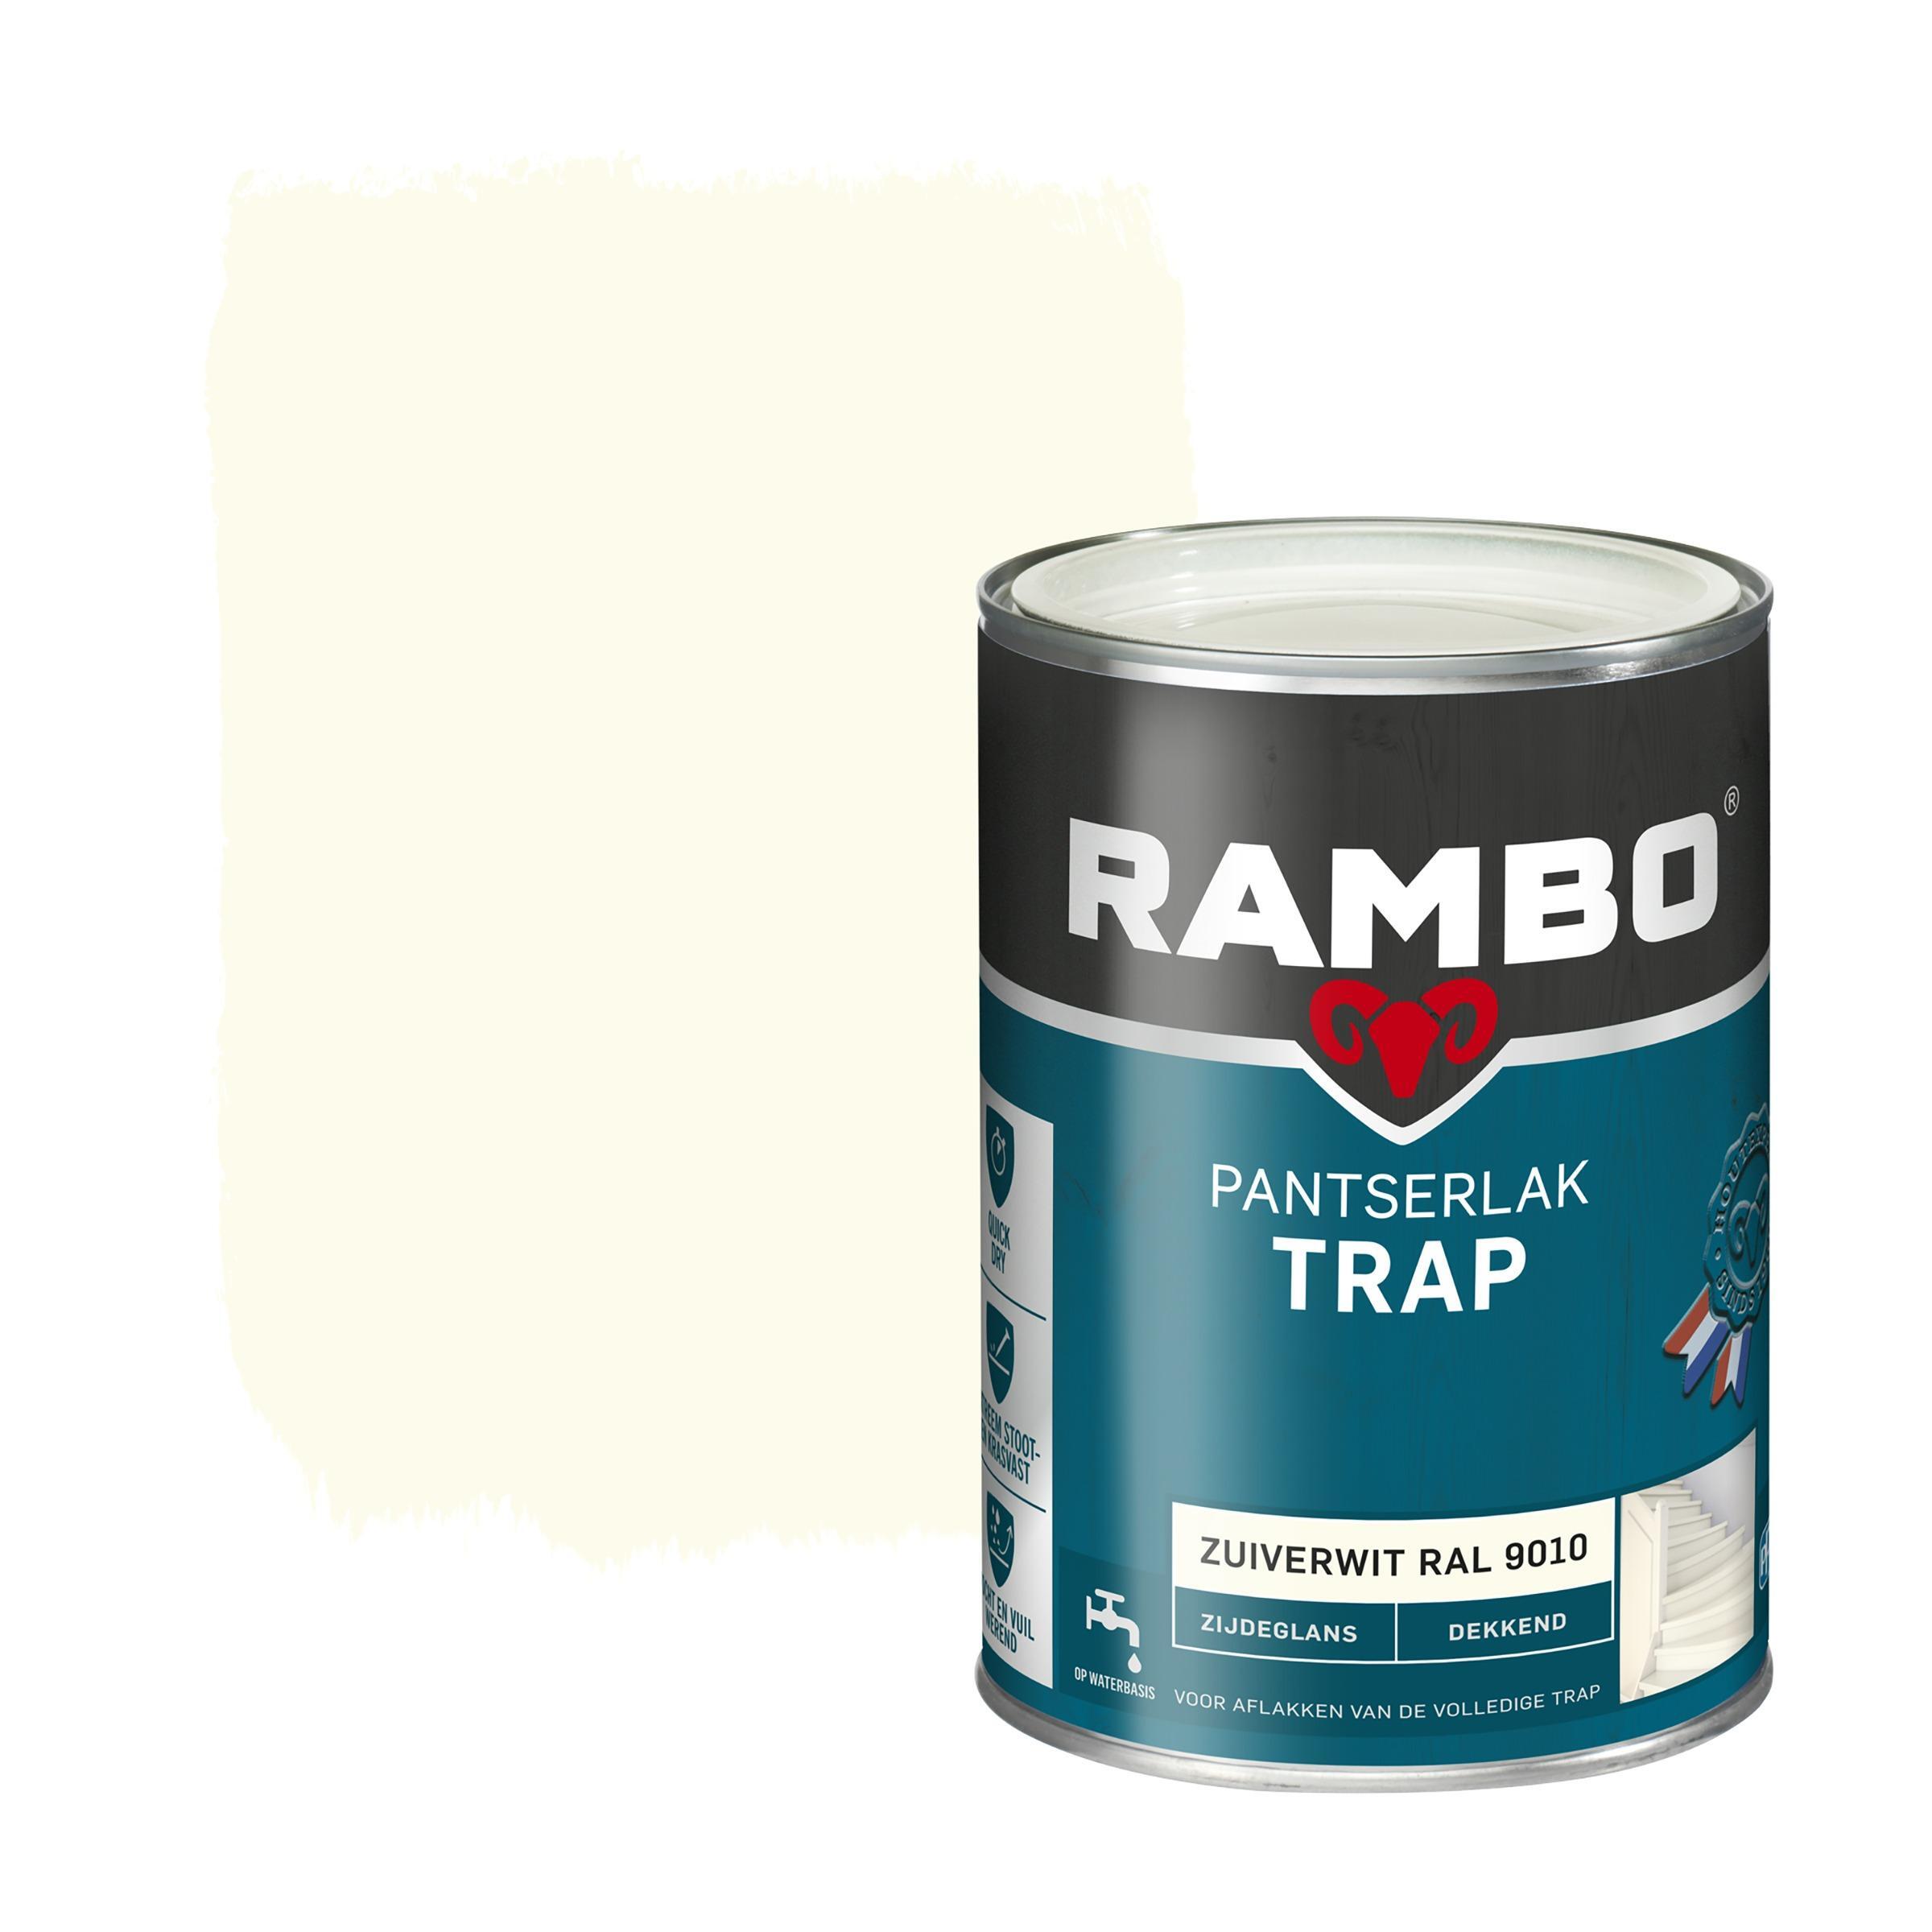 Rambo pantserlak trap dekkend zijdeglans zuiverwit